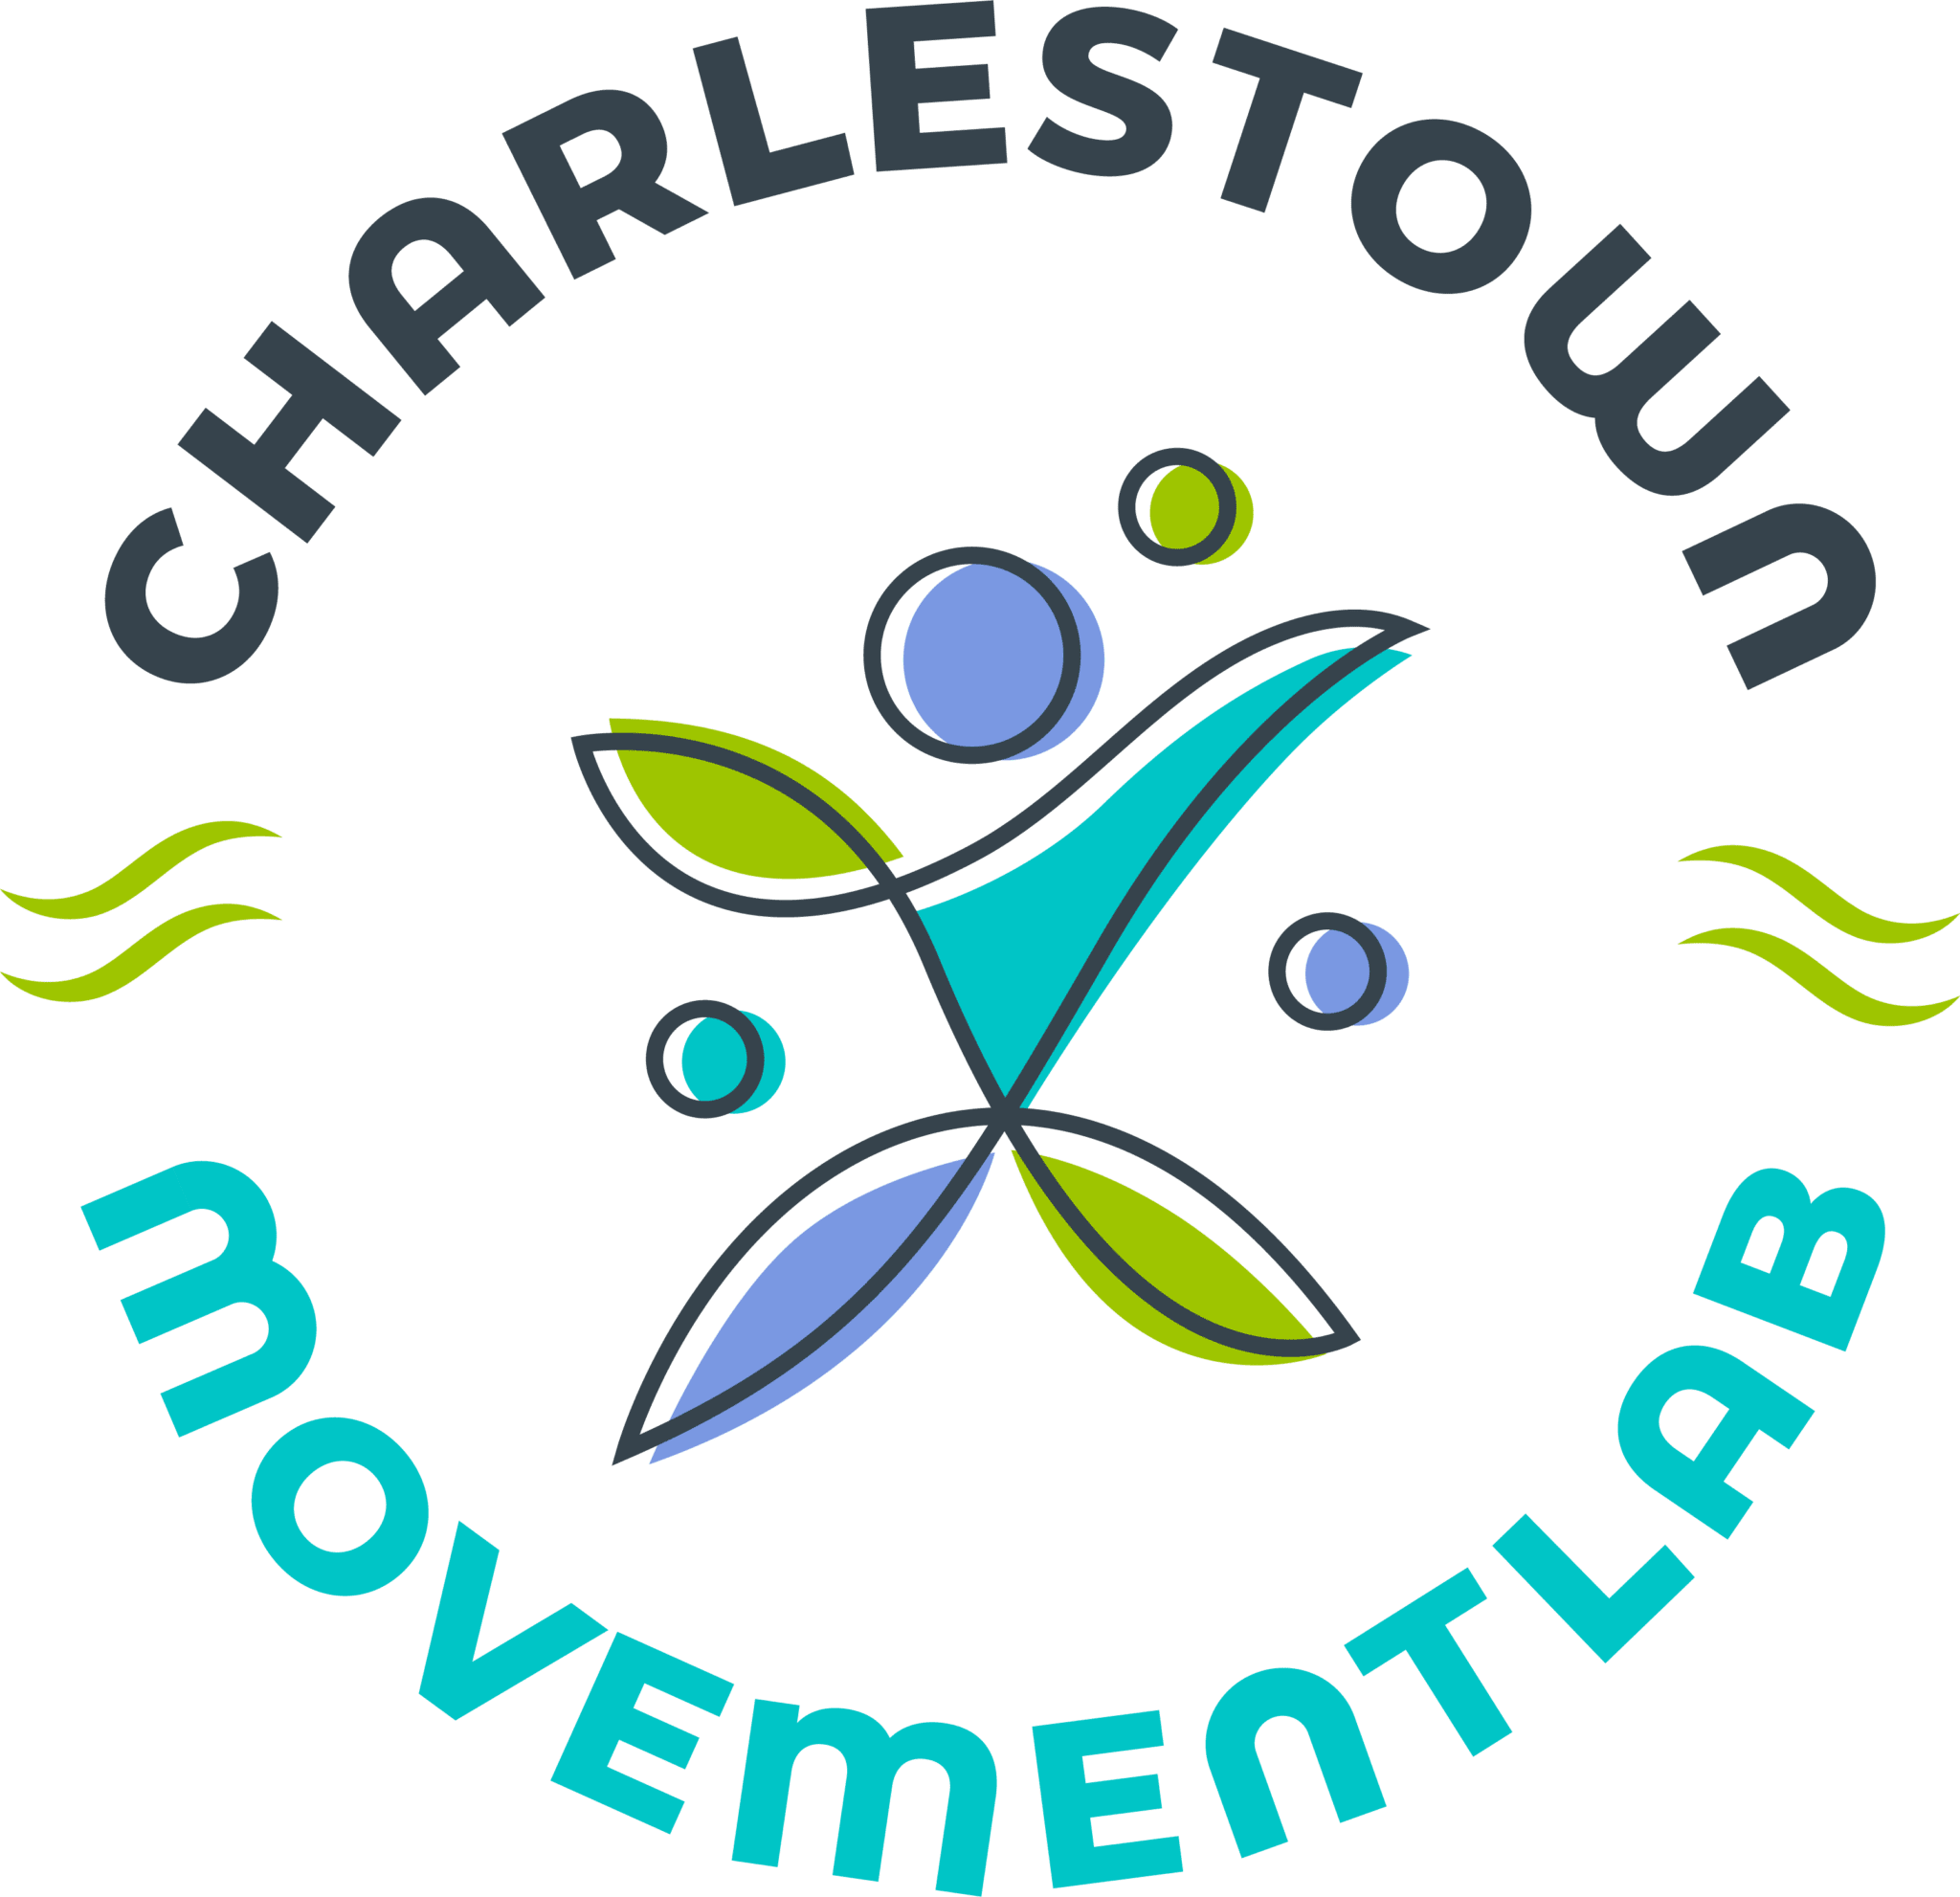 Charlestown MovementLab